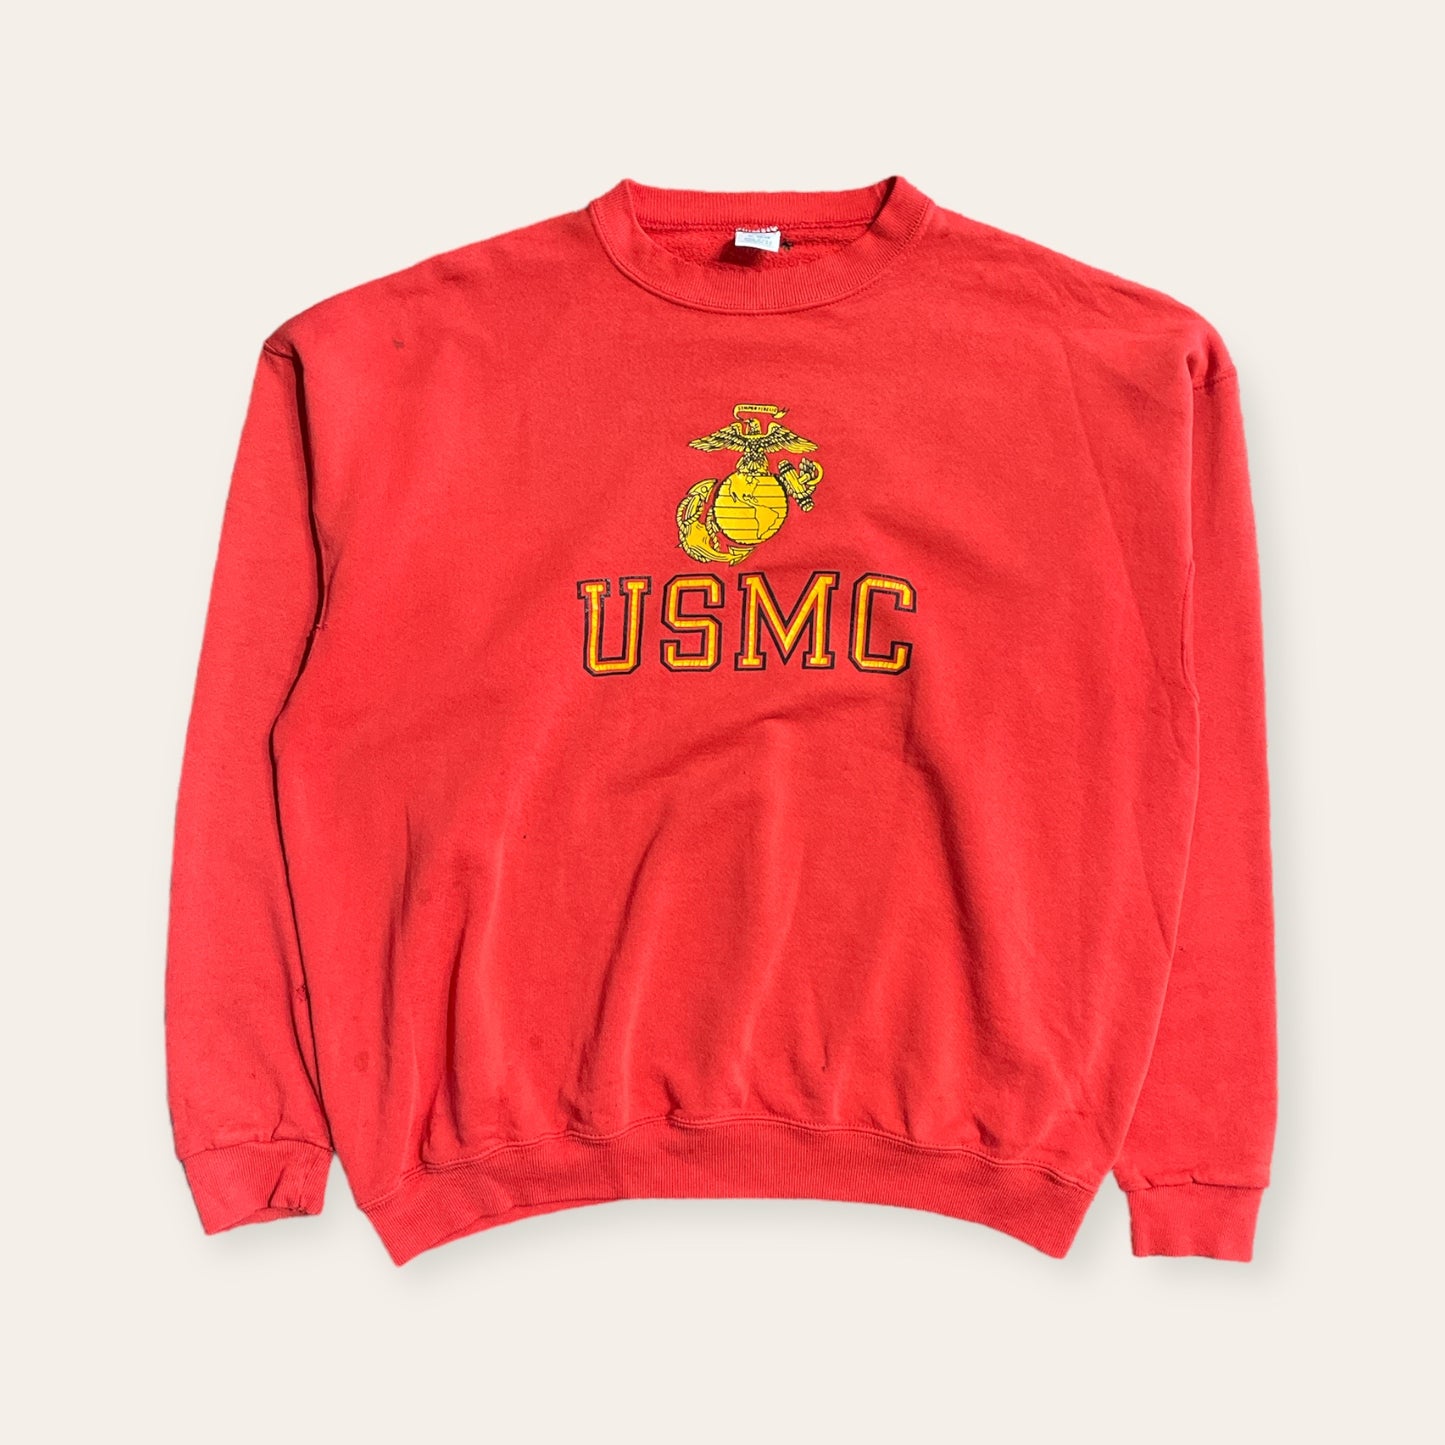 90s USMC Sweater Red Size XL